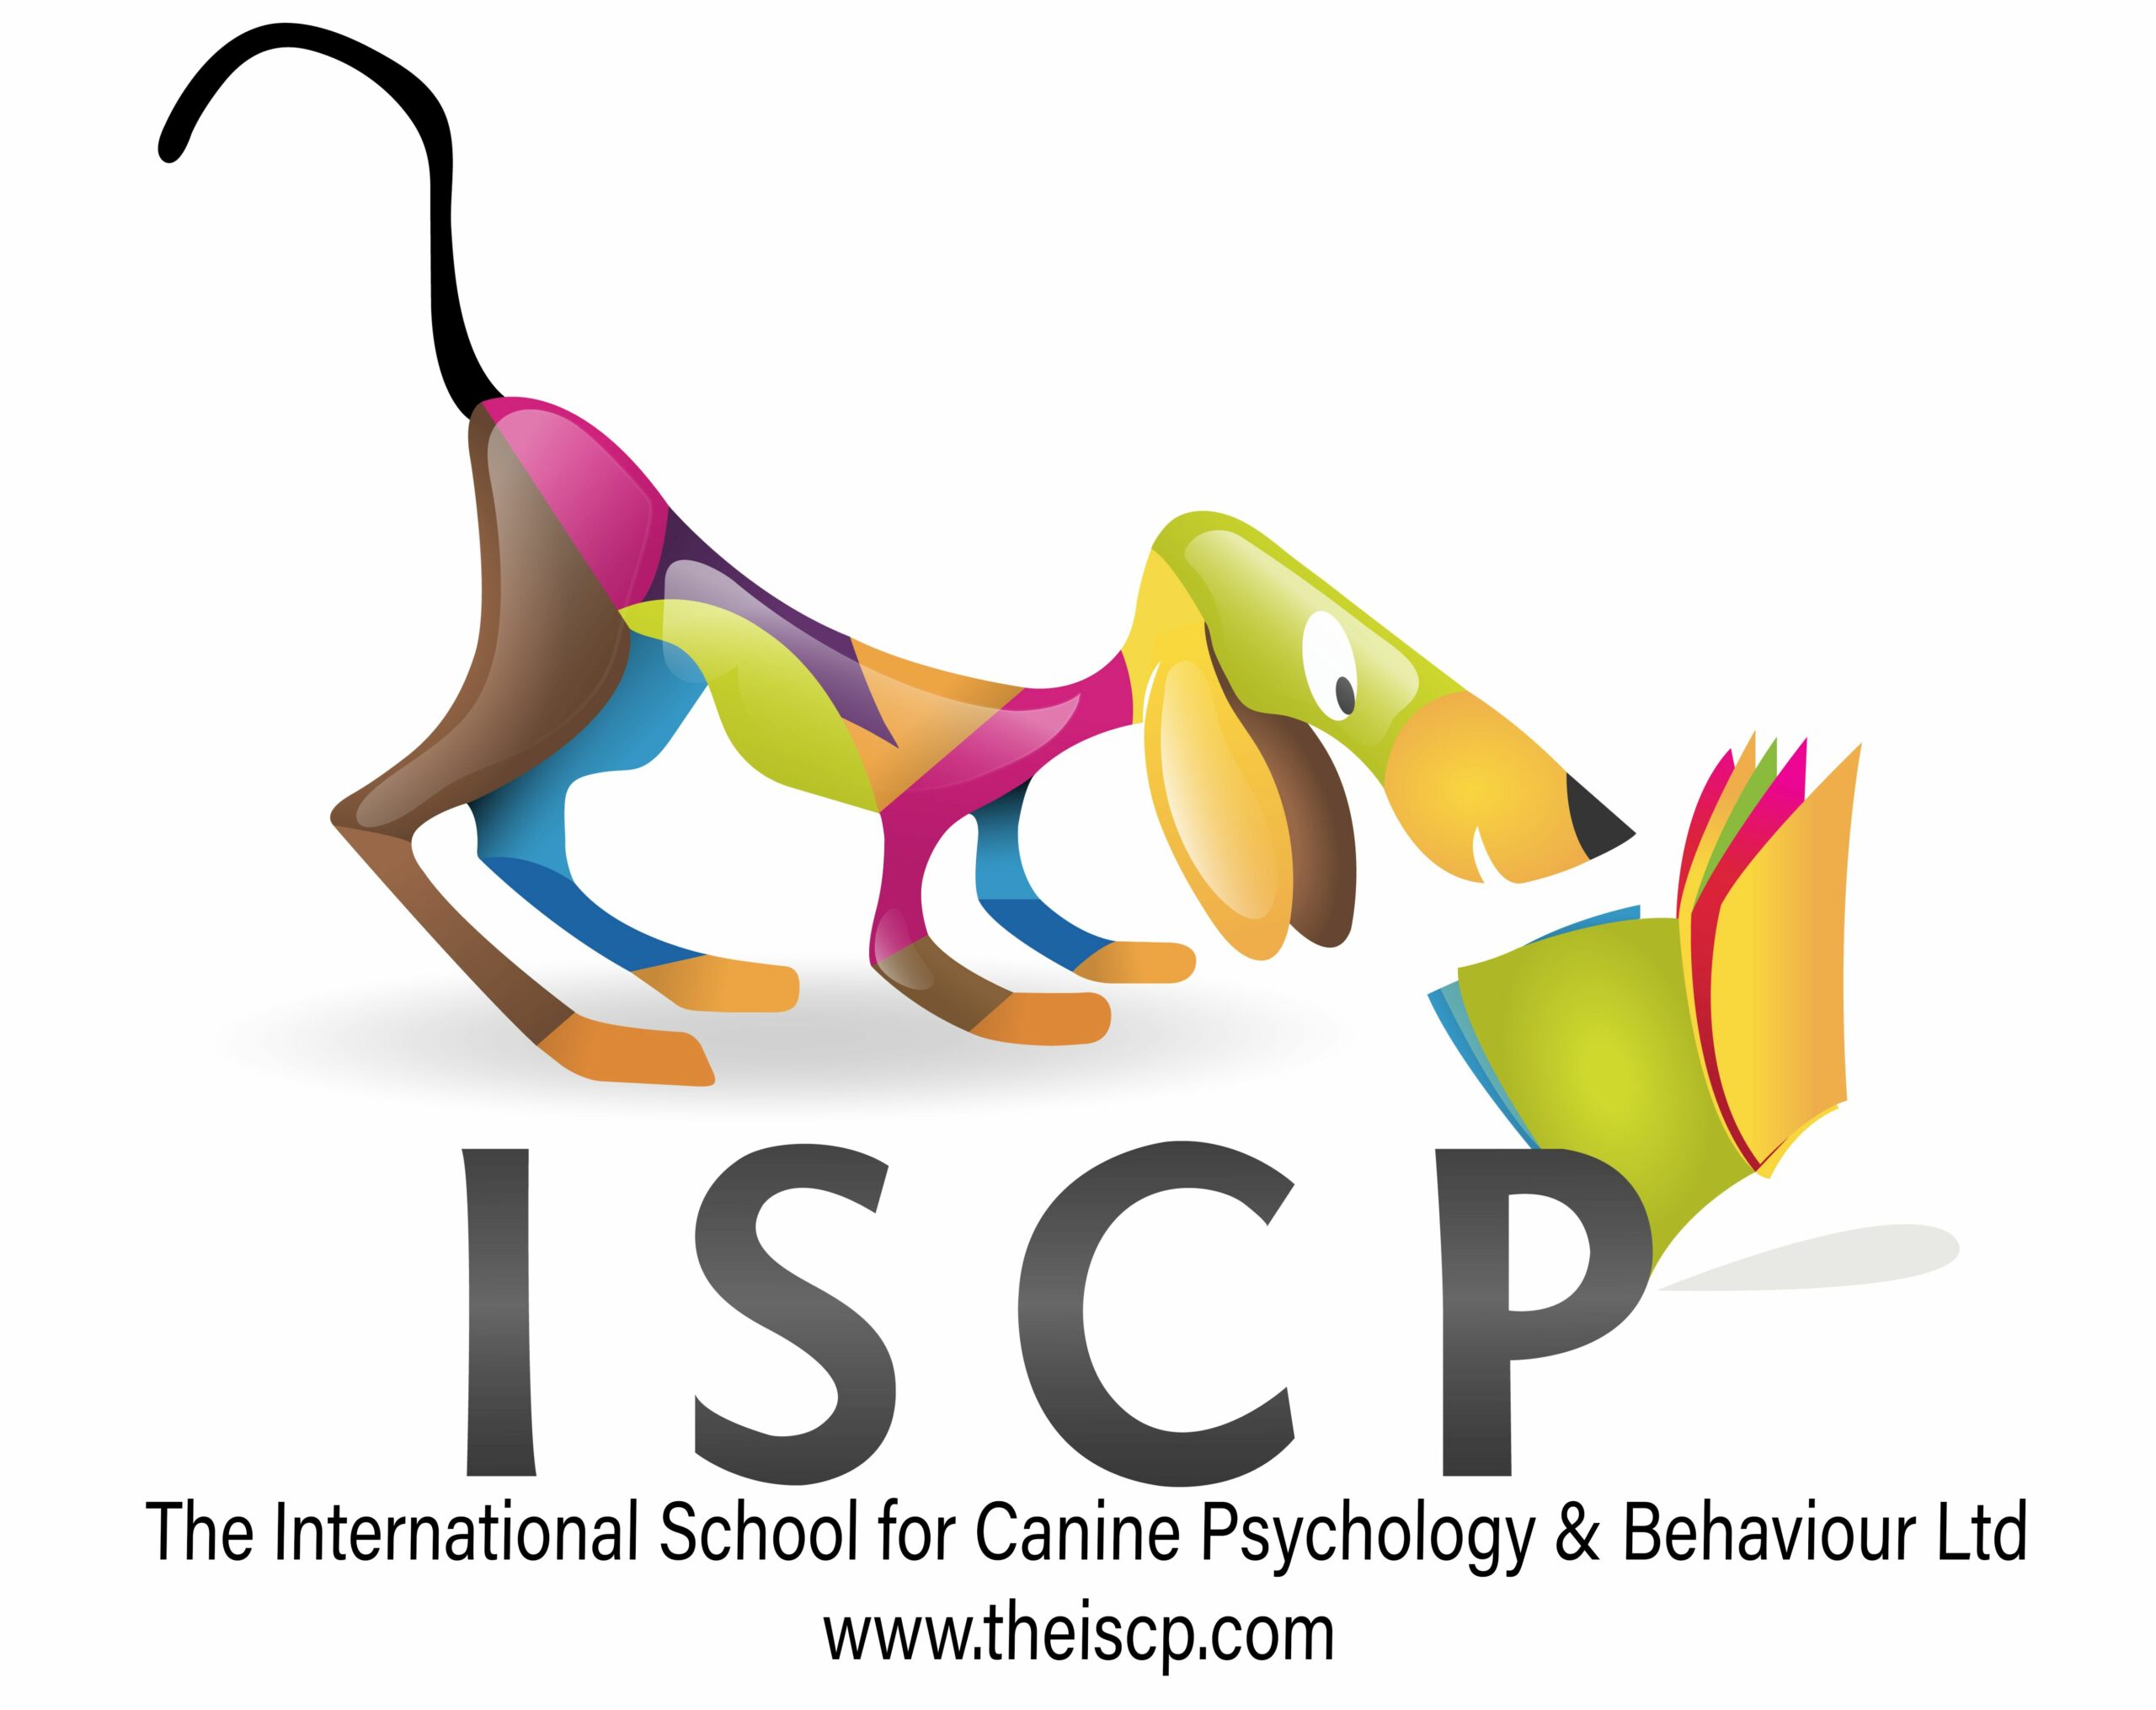 International School for Canine Psychology & Behaviour Ltd